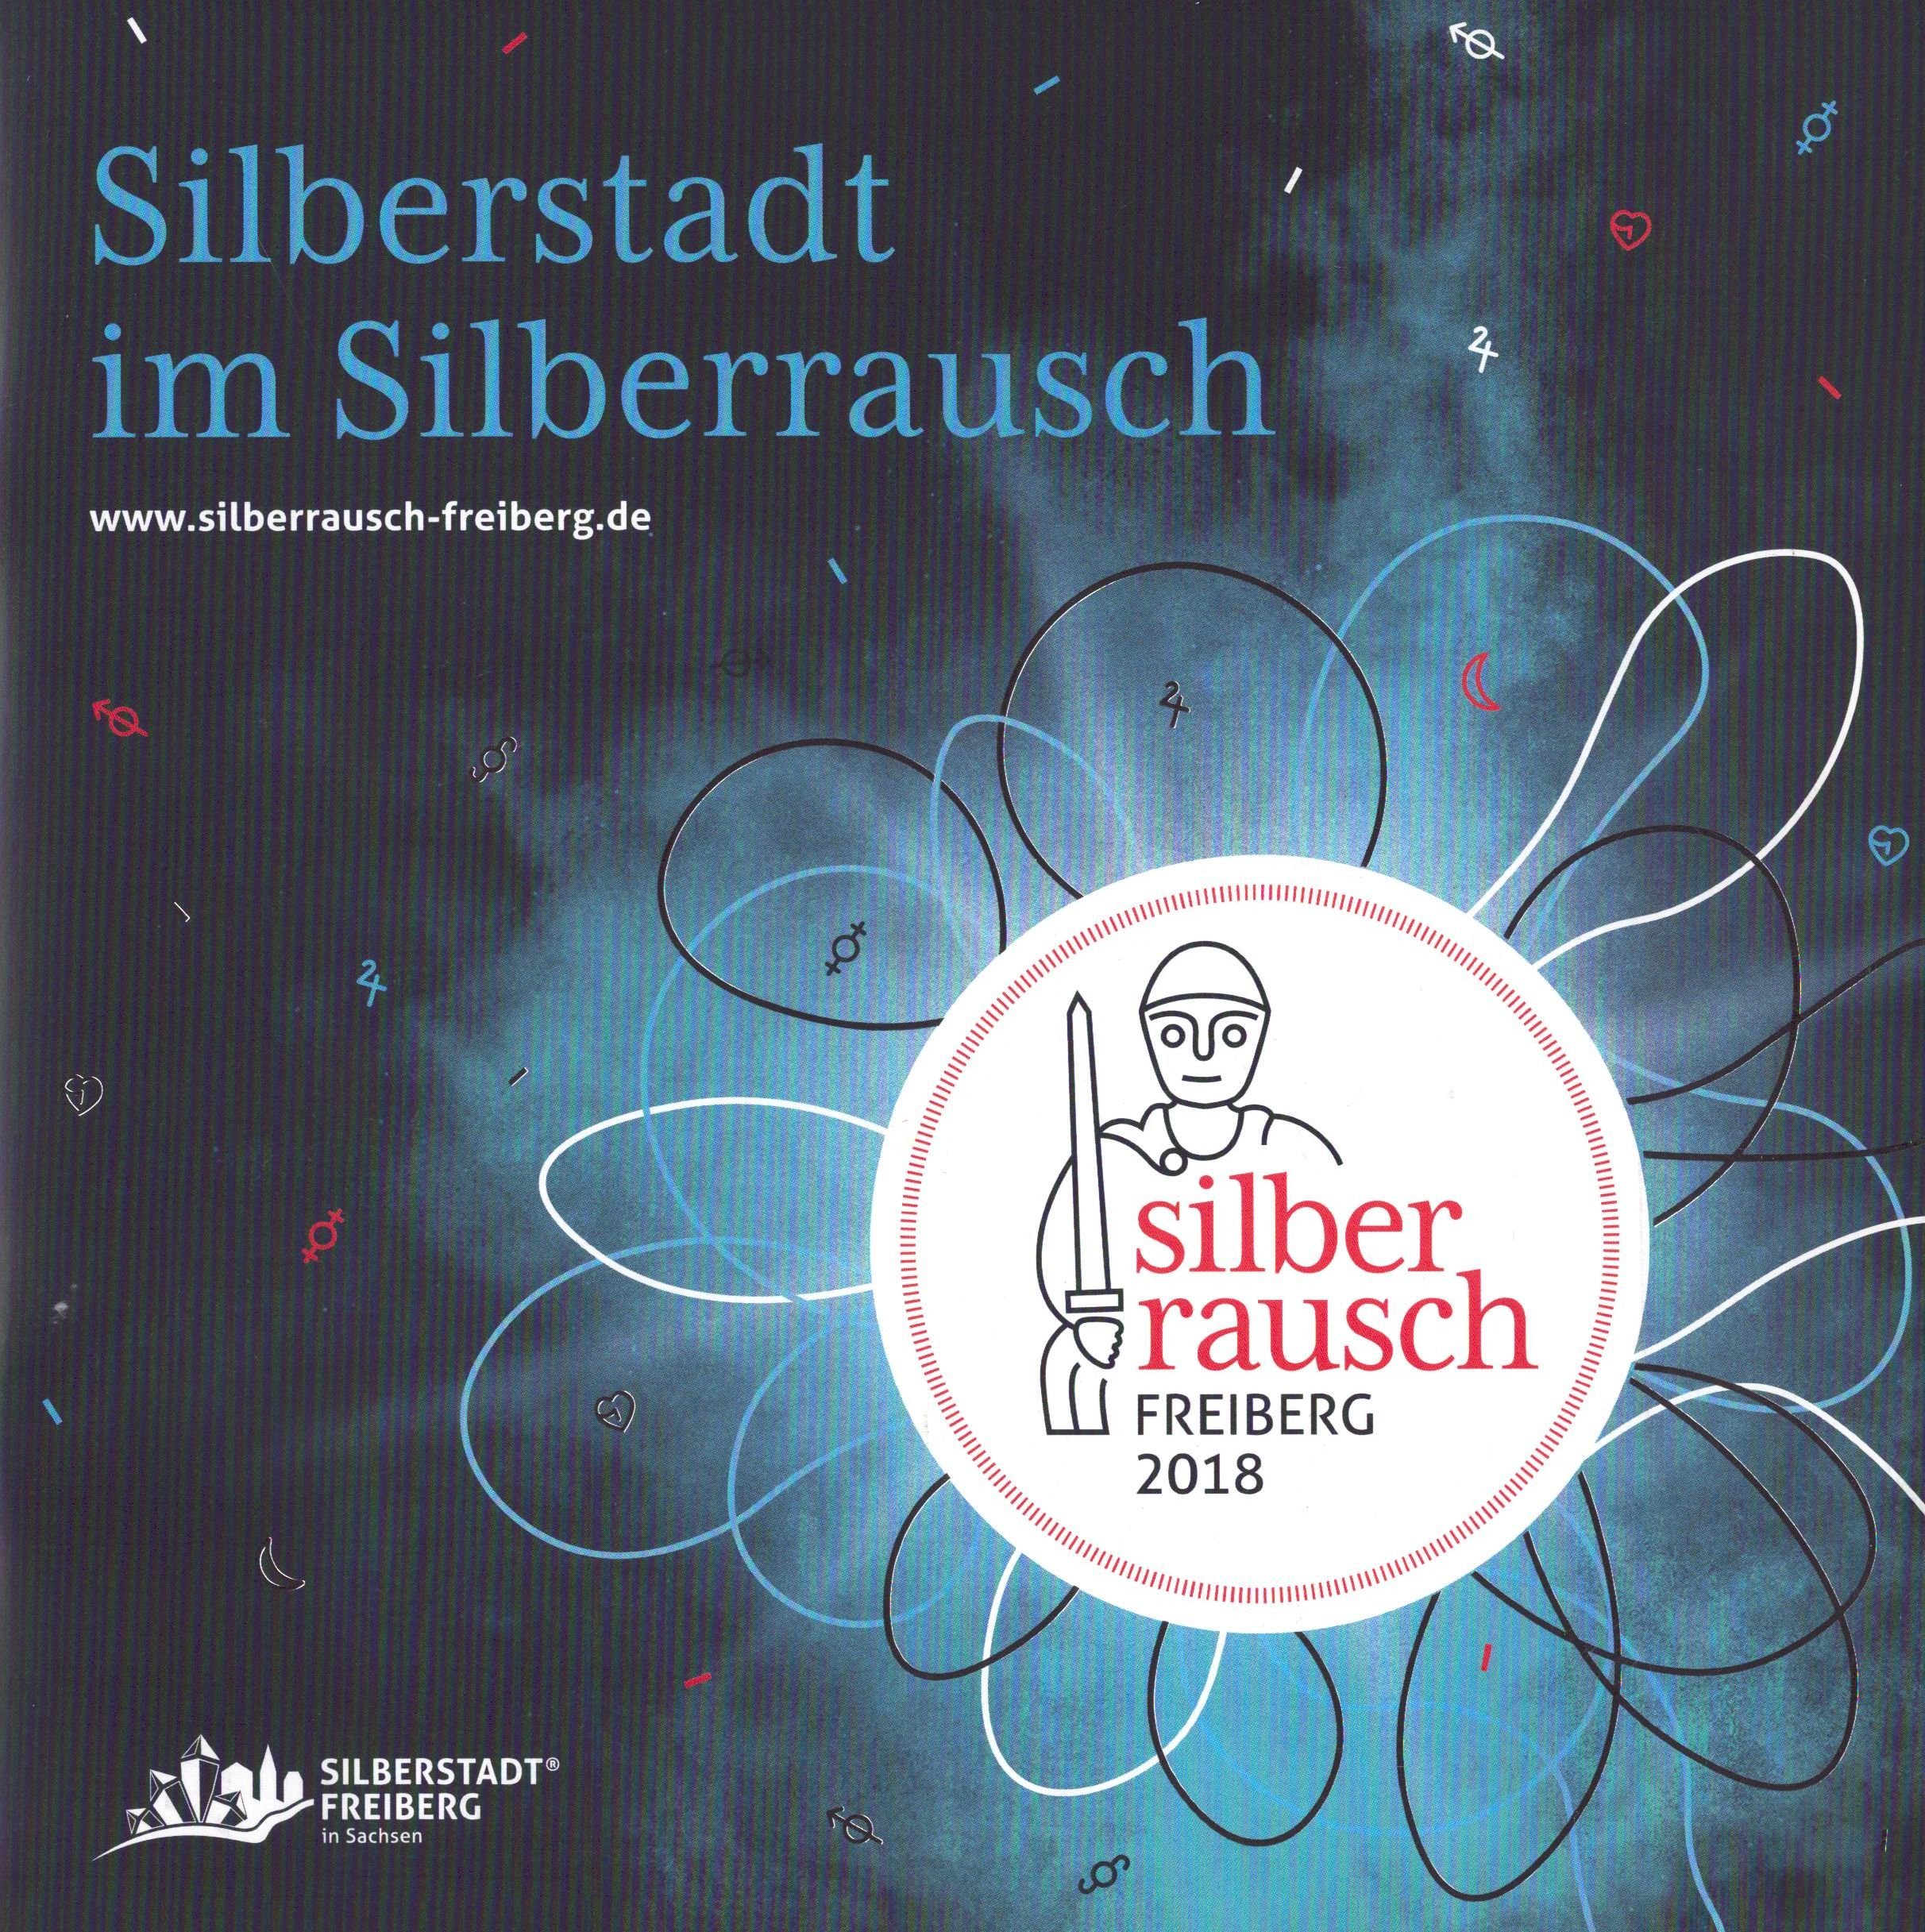 Silberstadt im Silberrausch - Freiberg 2018 (Archiv SAXONIA-FREIBERG-STIFTUNG CC BY-NC-SA)